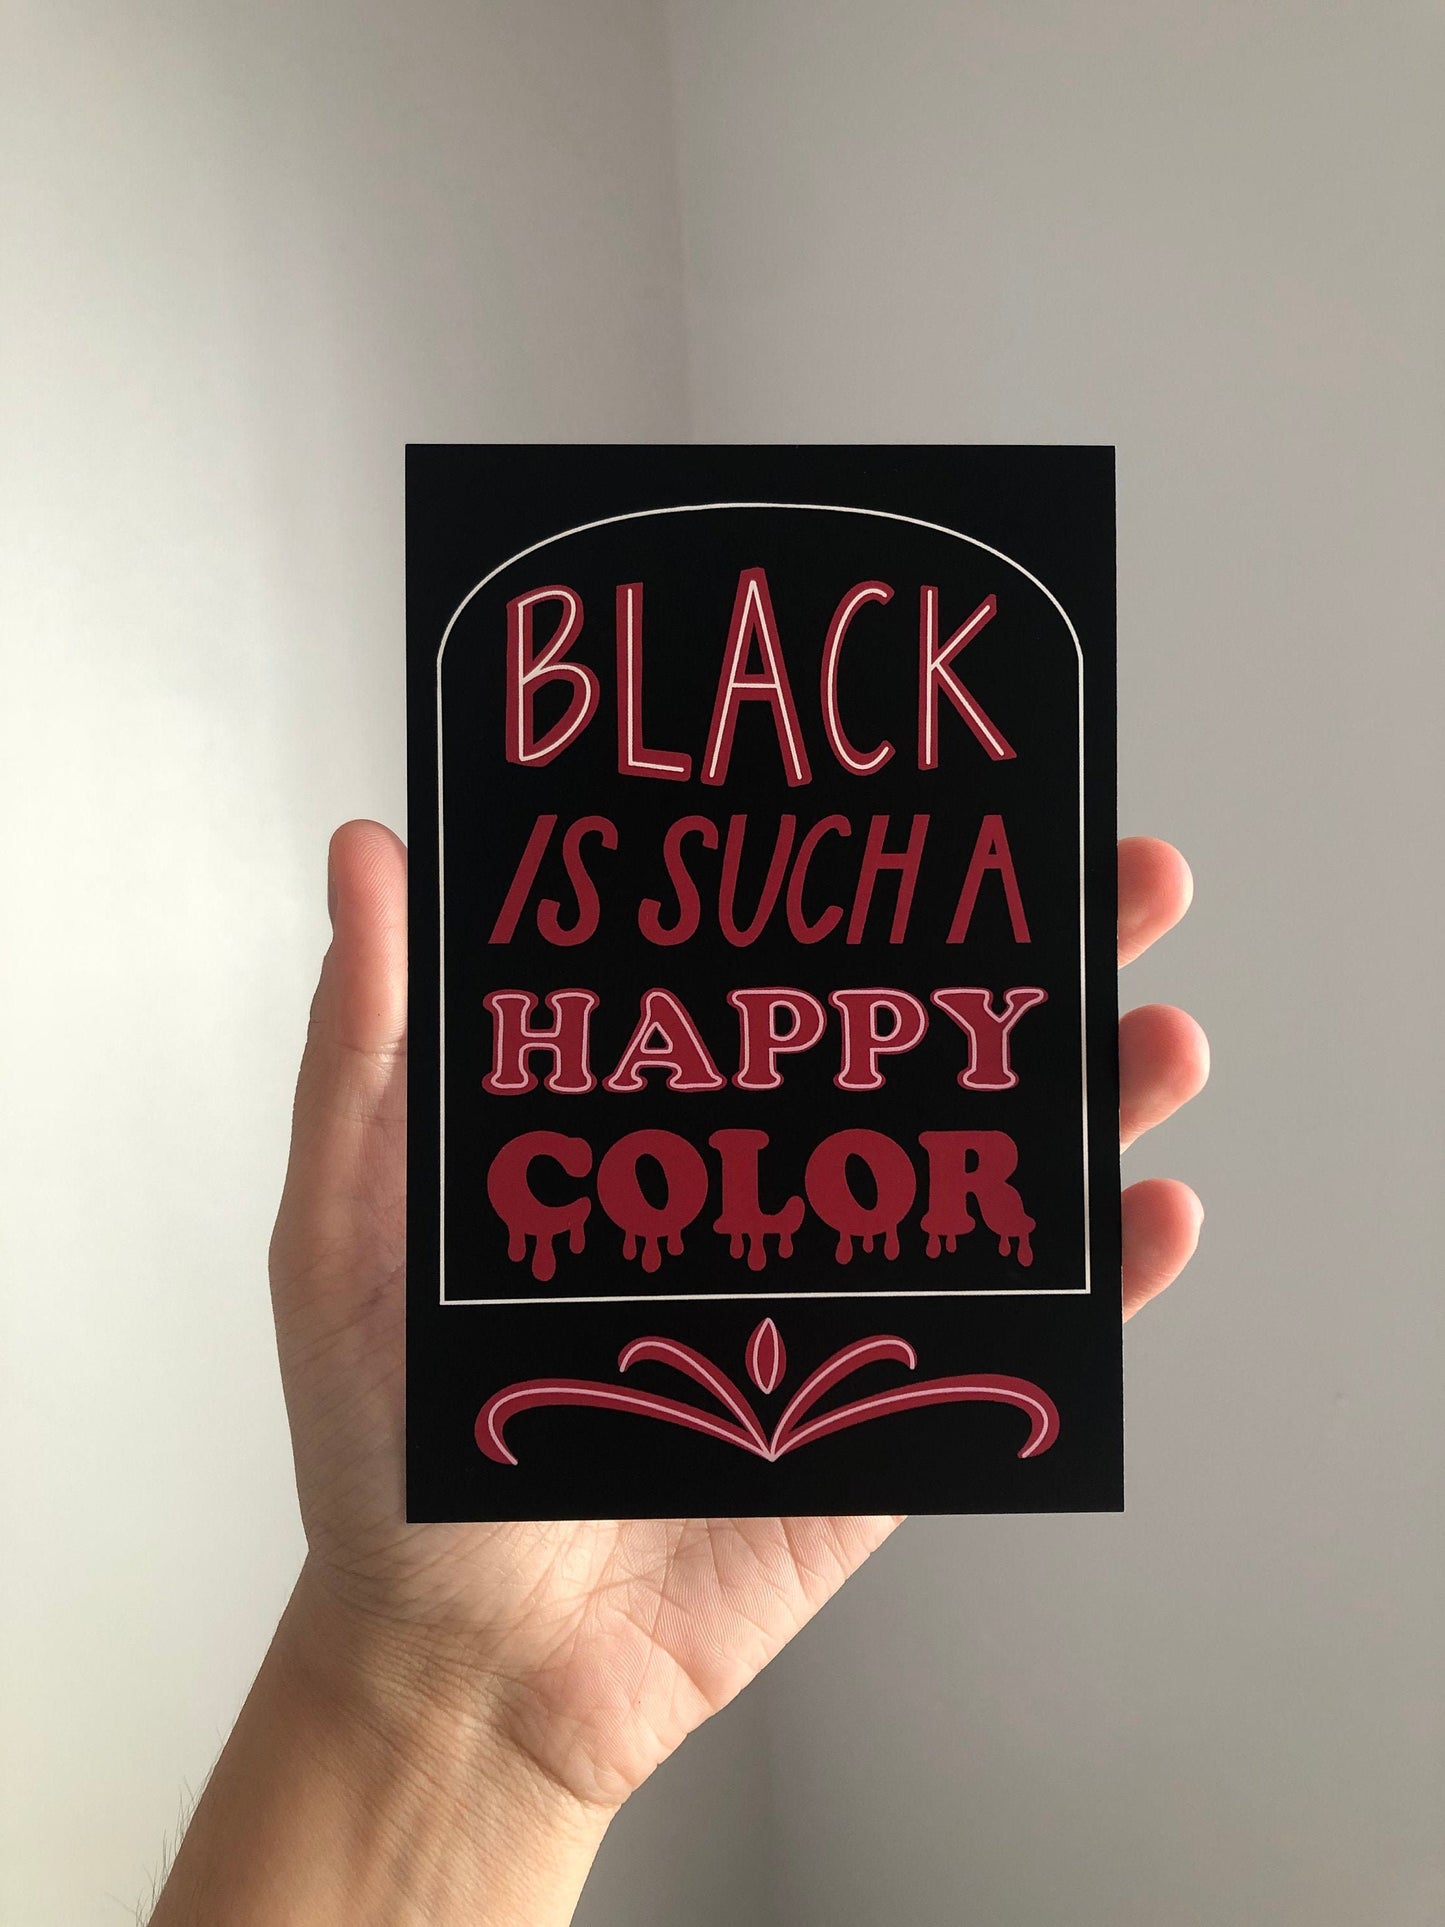 Black Is Such A Happy Color - Addams Family Print, Morticia Addams Card